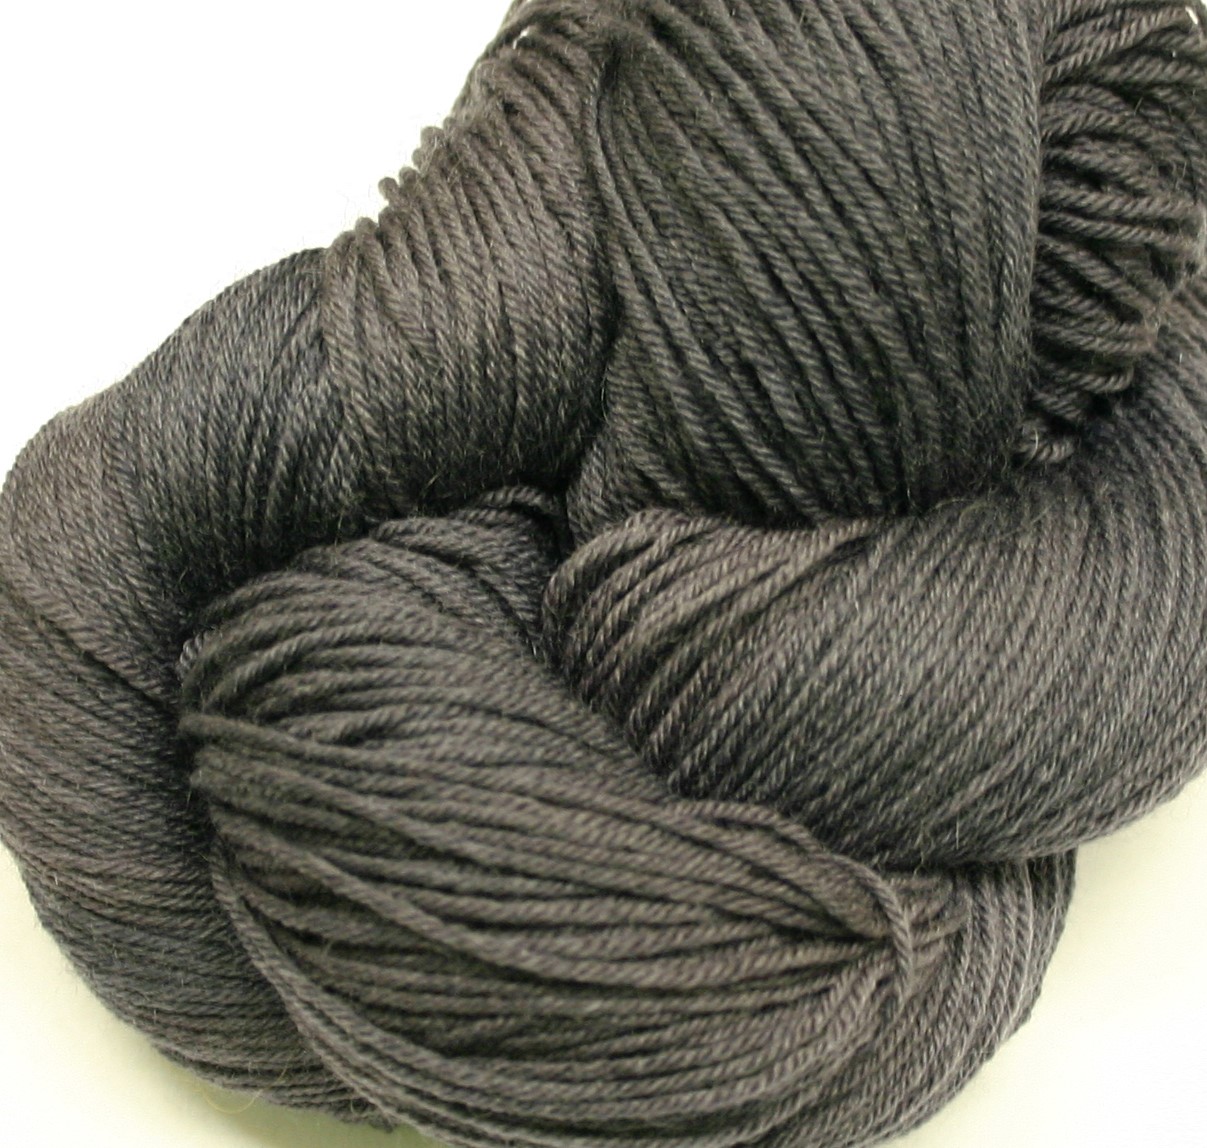 Ivy Brambles Enrapture Yarn - 130 Elegant Black